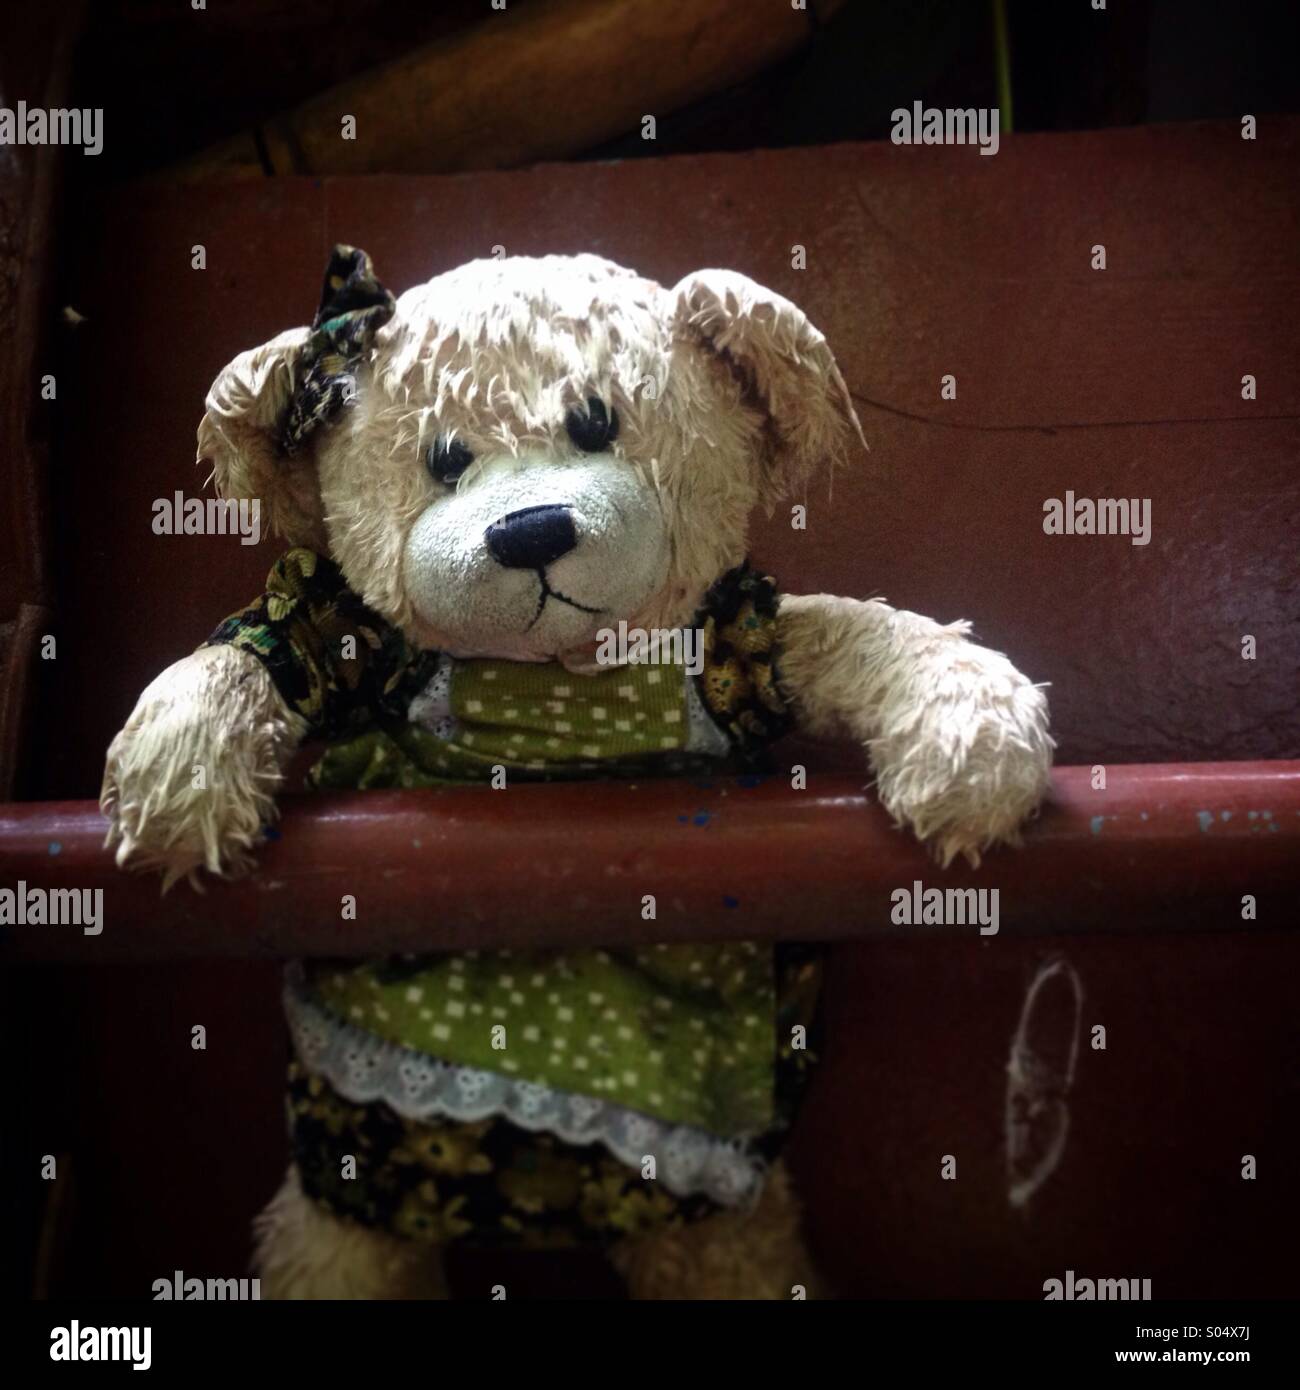 A wet teddy bear decorates a house in Mexico City, Mexico Stock Photo